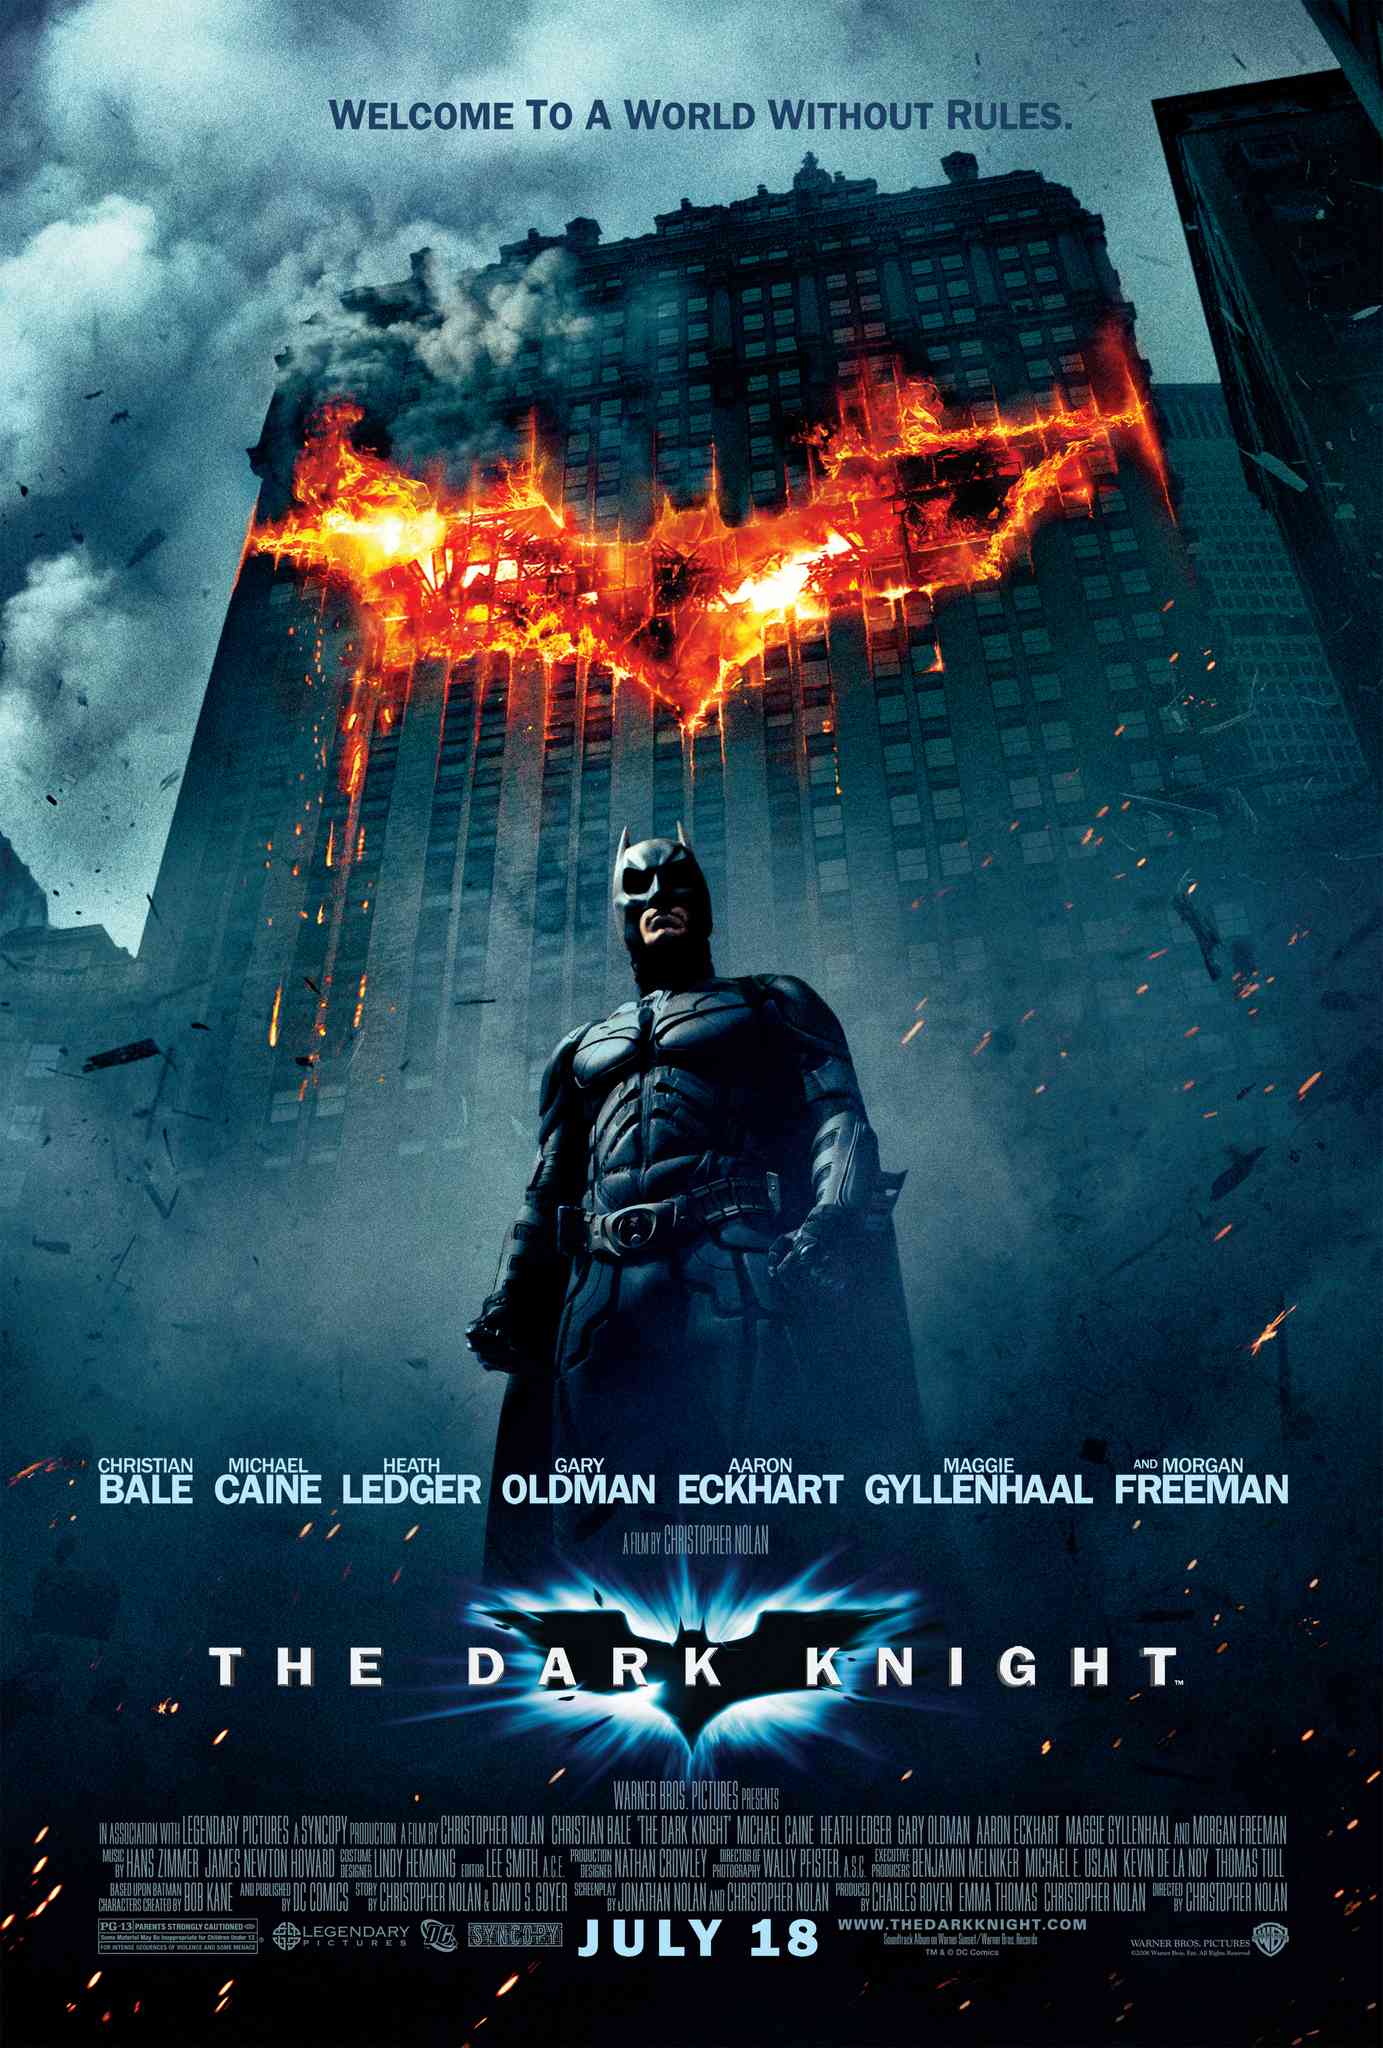 FULL MOVIE: The Dark Knight (2008)